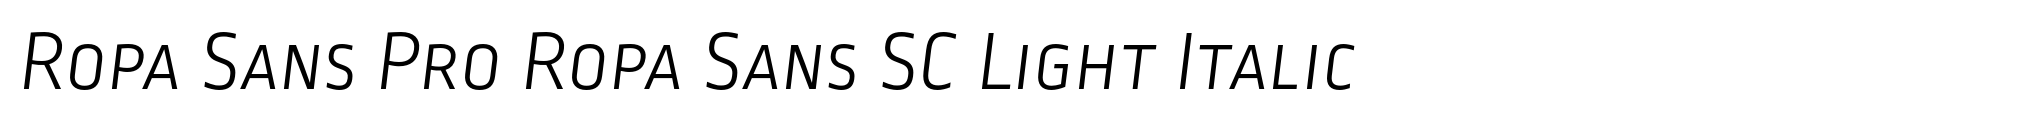 Ropa Sans Pro Ropa Sans SC Light Italic image